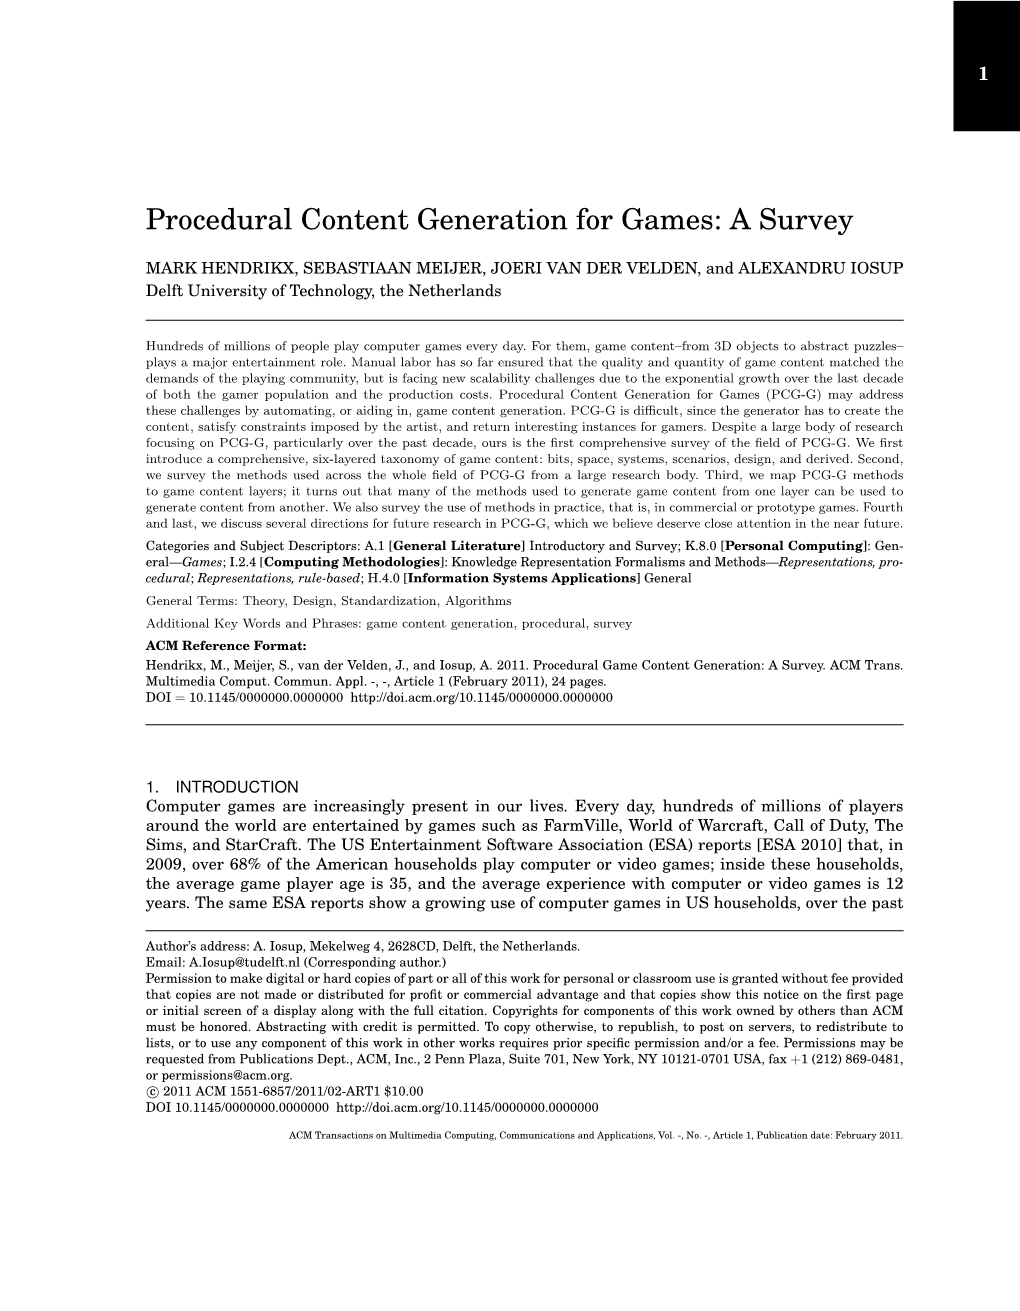 Procedural Content Generation for Games: a Survey